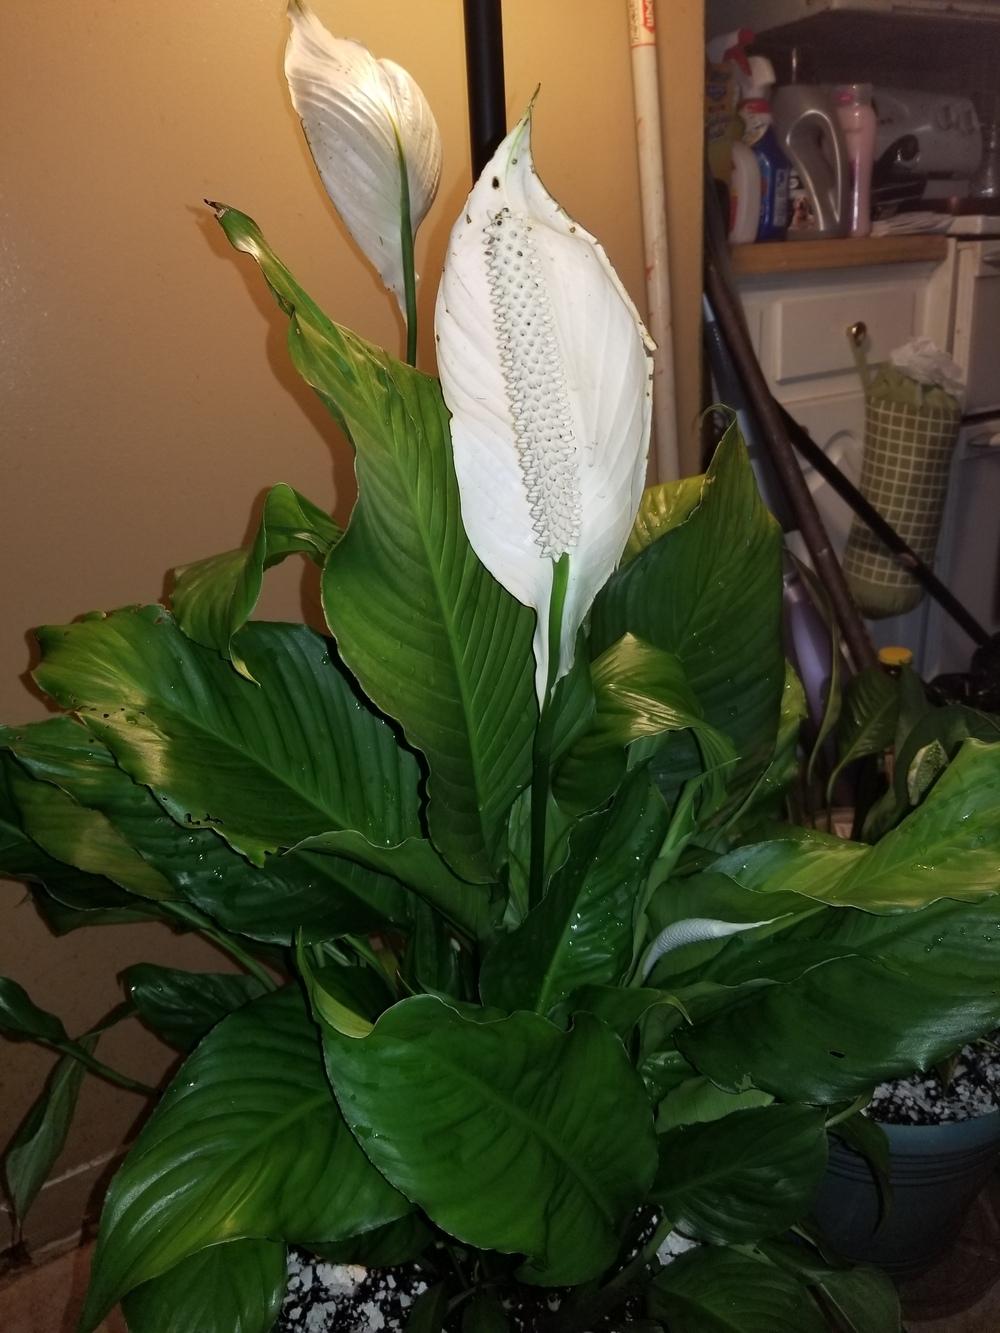 A medium sized peace lily plant